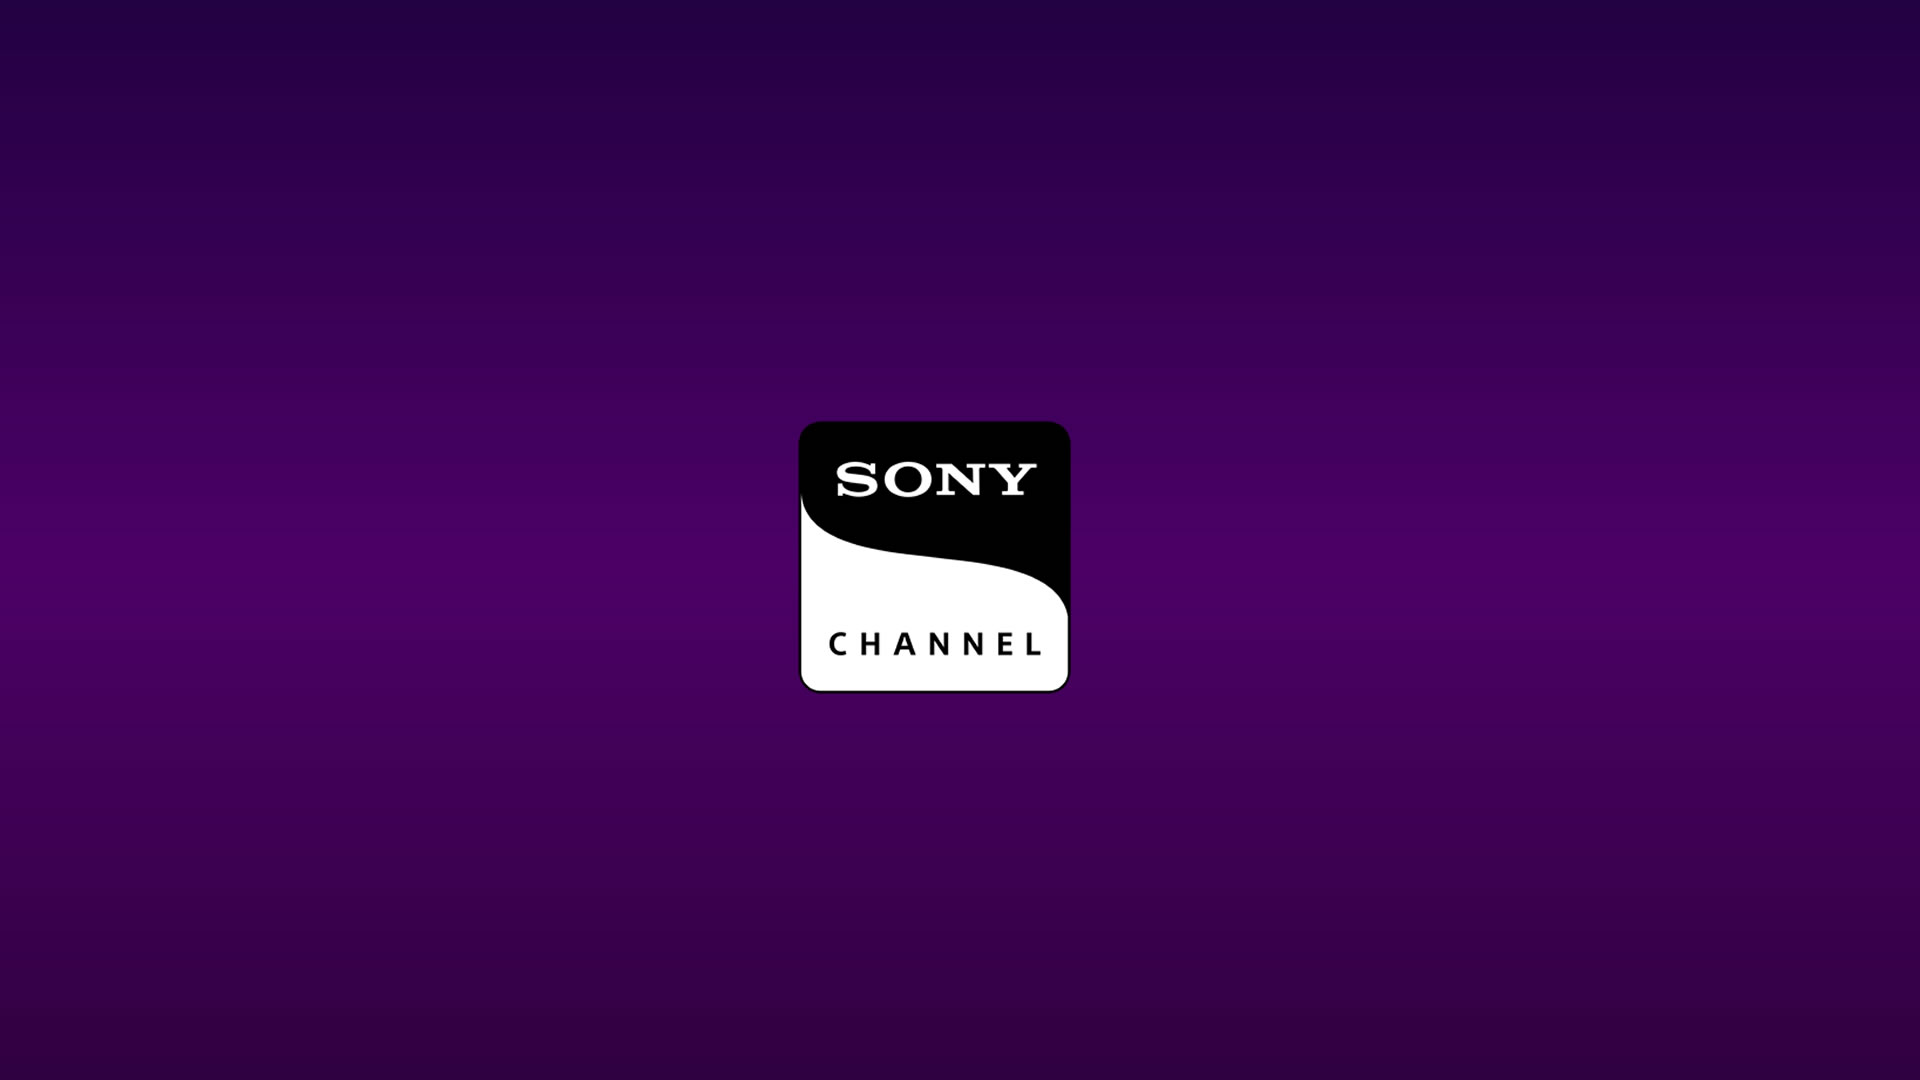 Sony Channel Online